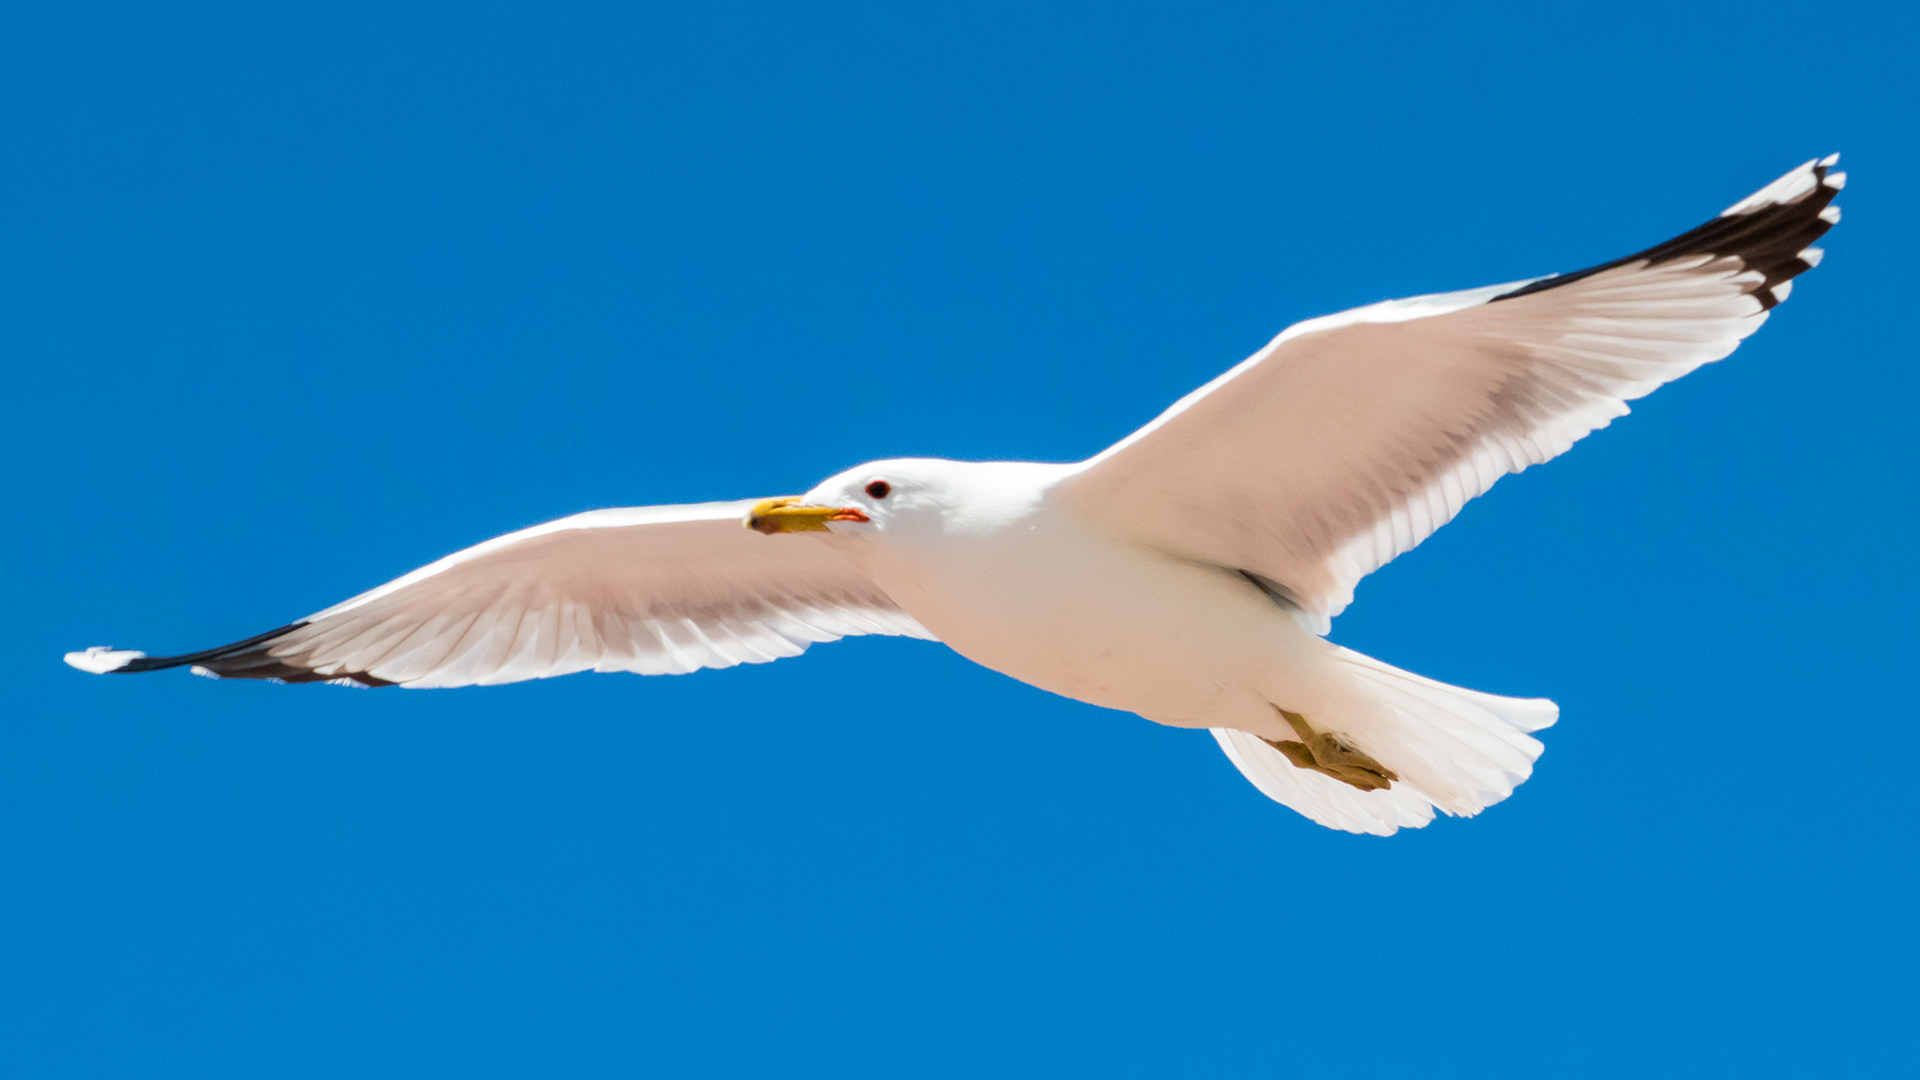 General 1920x1080 animals seagulls blue background clear sky flying birds blue sky sky blue